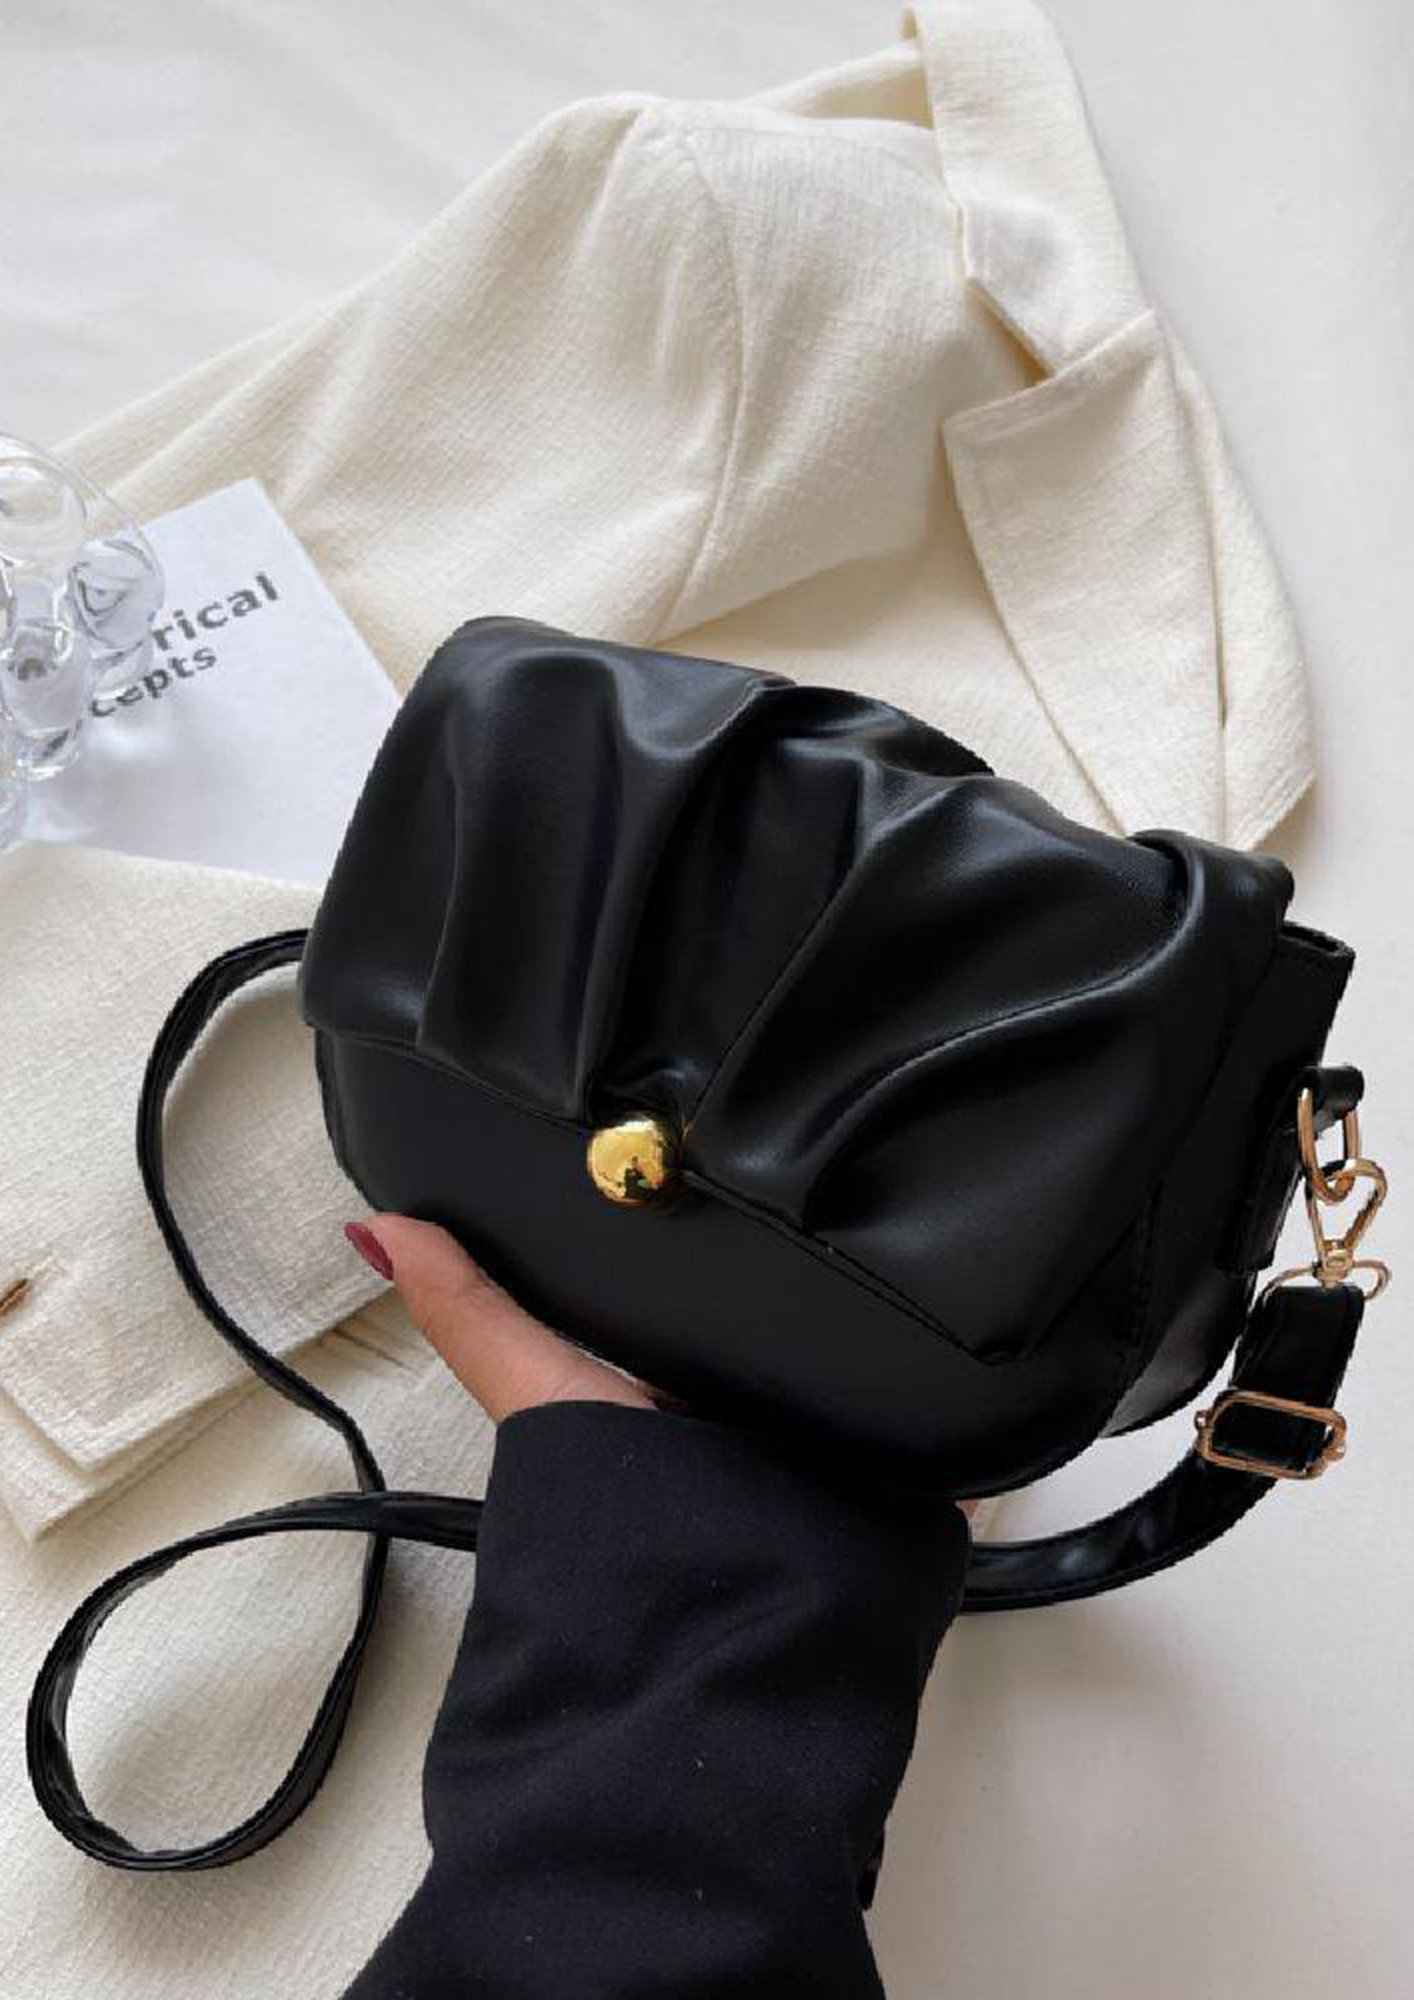 Cute Black Cat Handbags Purses Lunch Box Bag Accessories Shopping Cosmetic  New | eBay